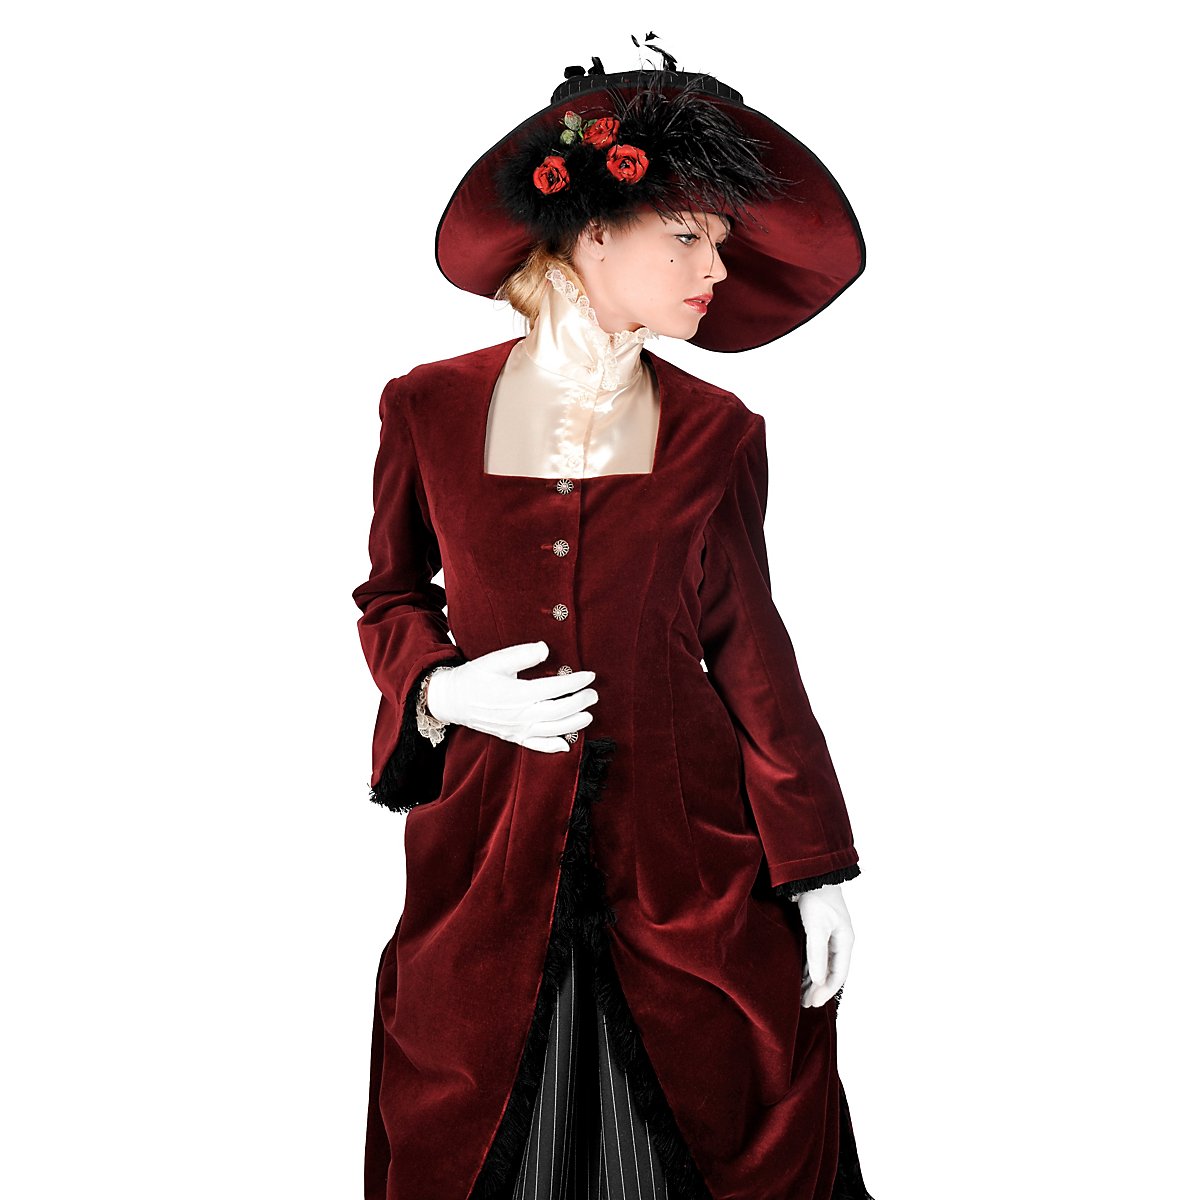 English Lady Costume - andracor.com